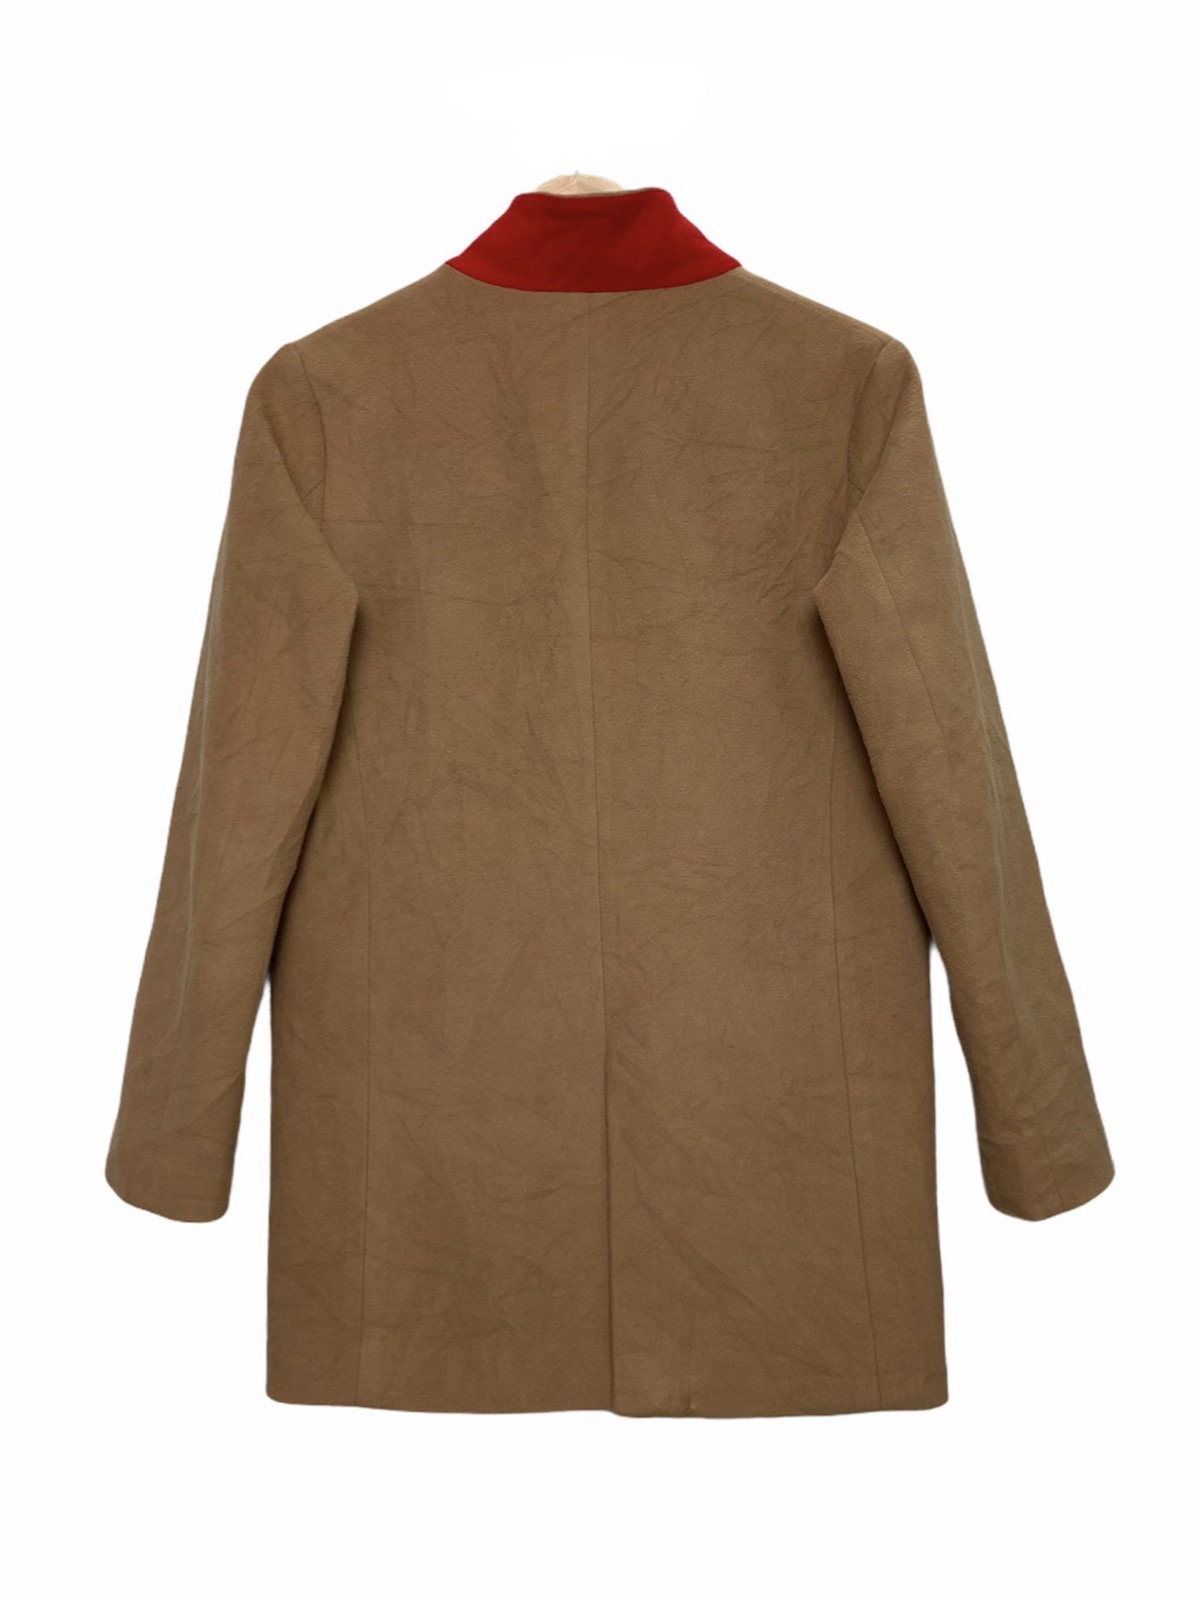 Uniqlo x Undercover Fleece Jacket/Coat - 2